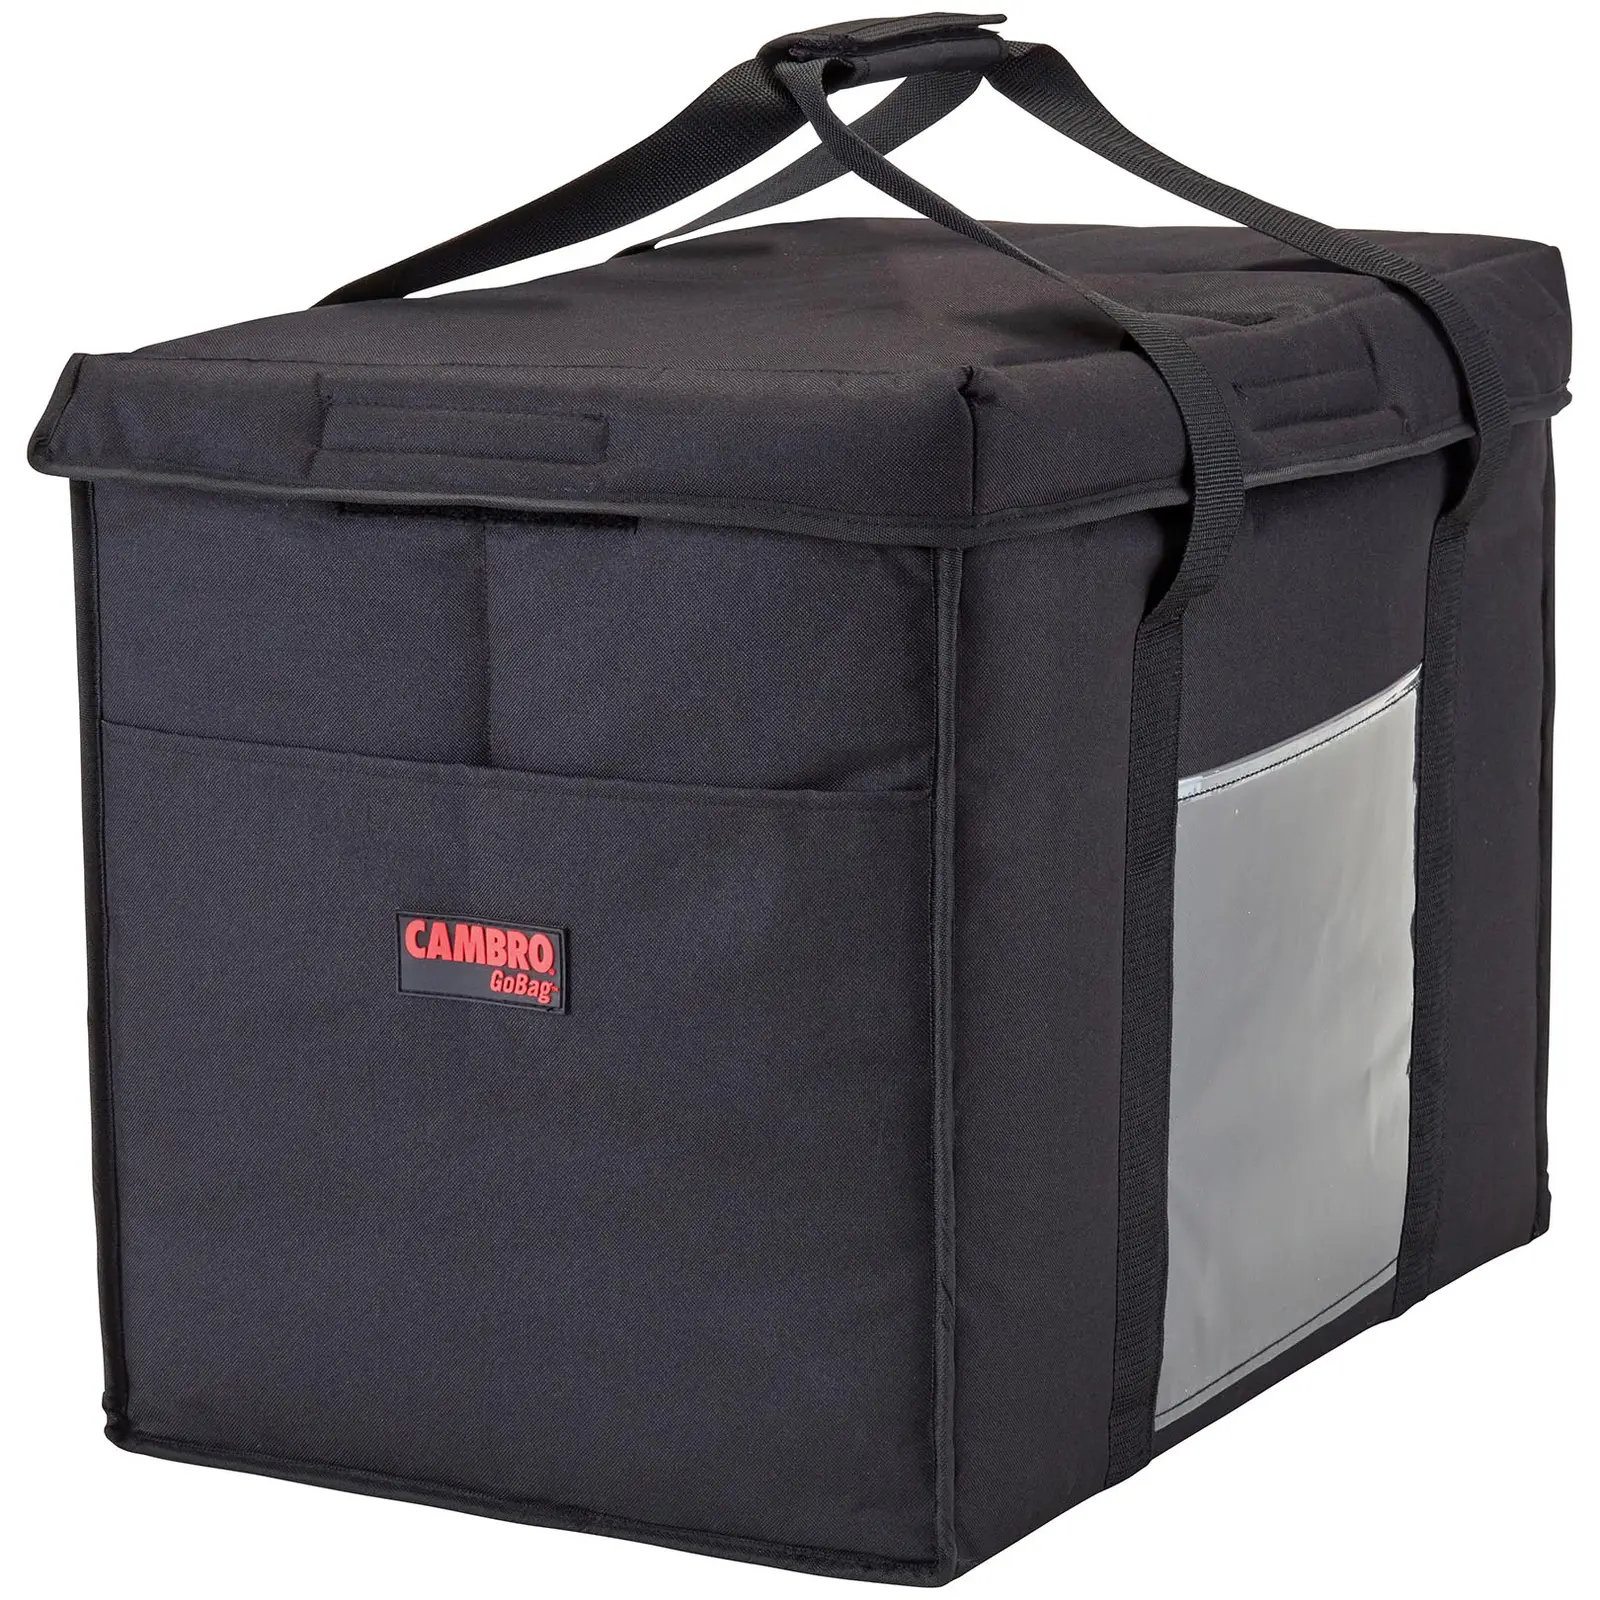 Food Delivery Bag - 53.5 x 35.5 x 43 cm - Black - foldable